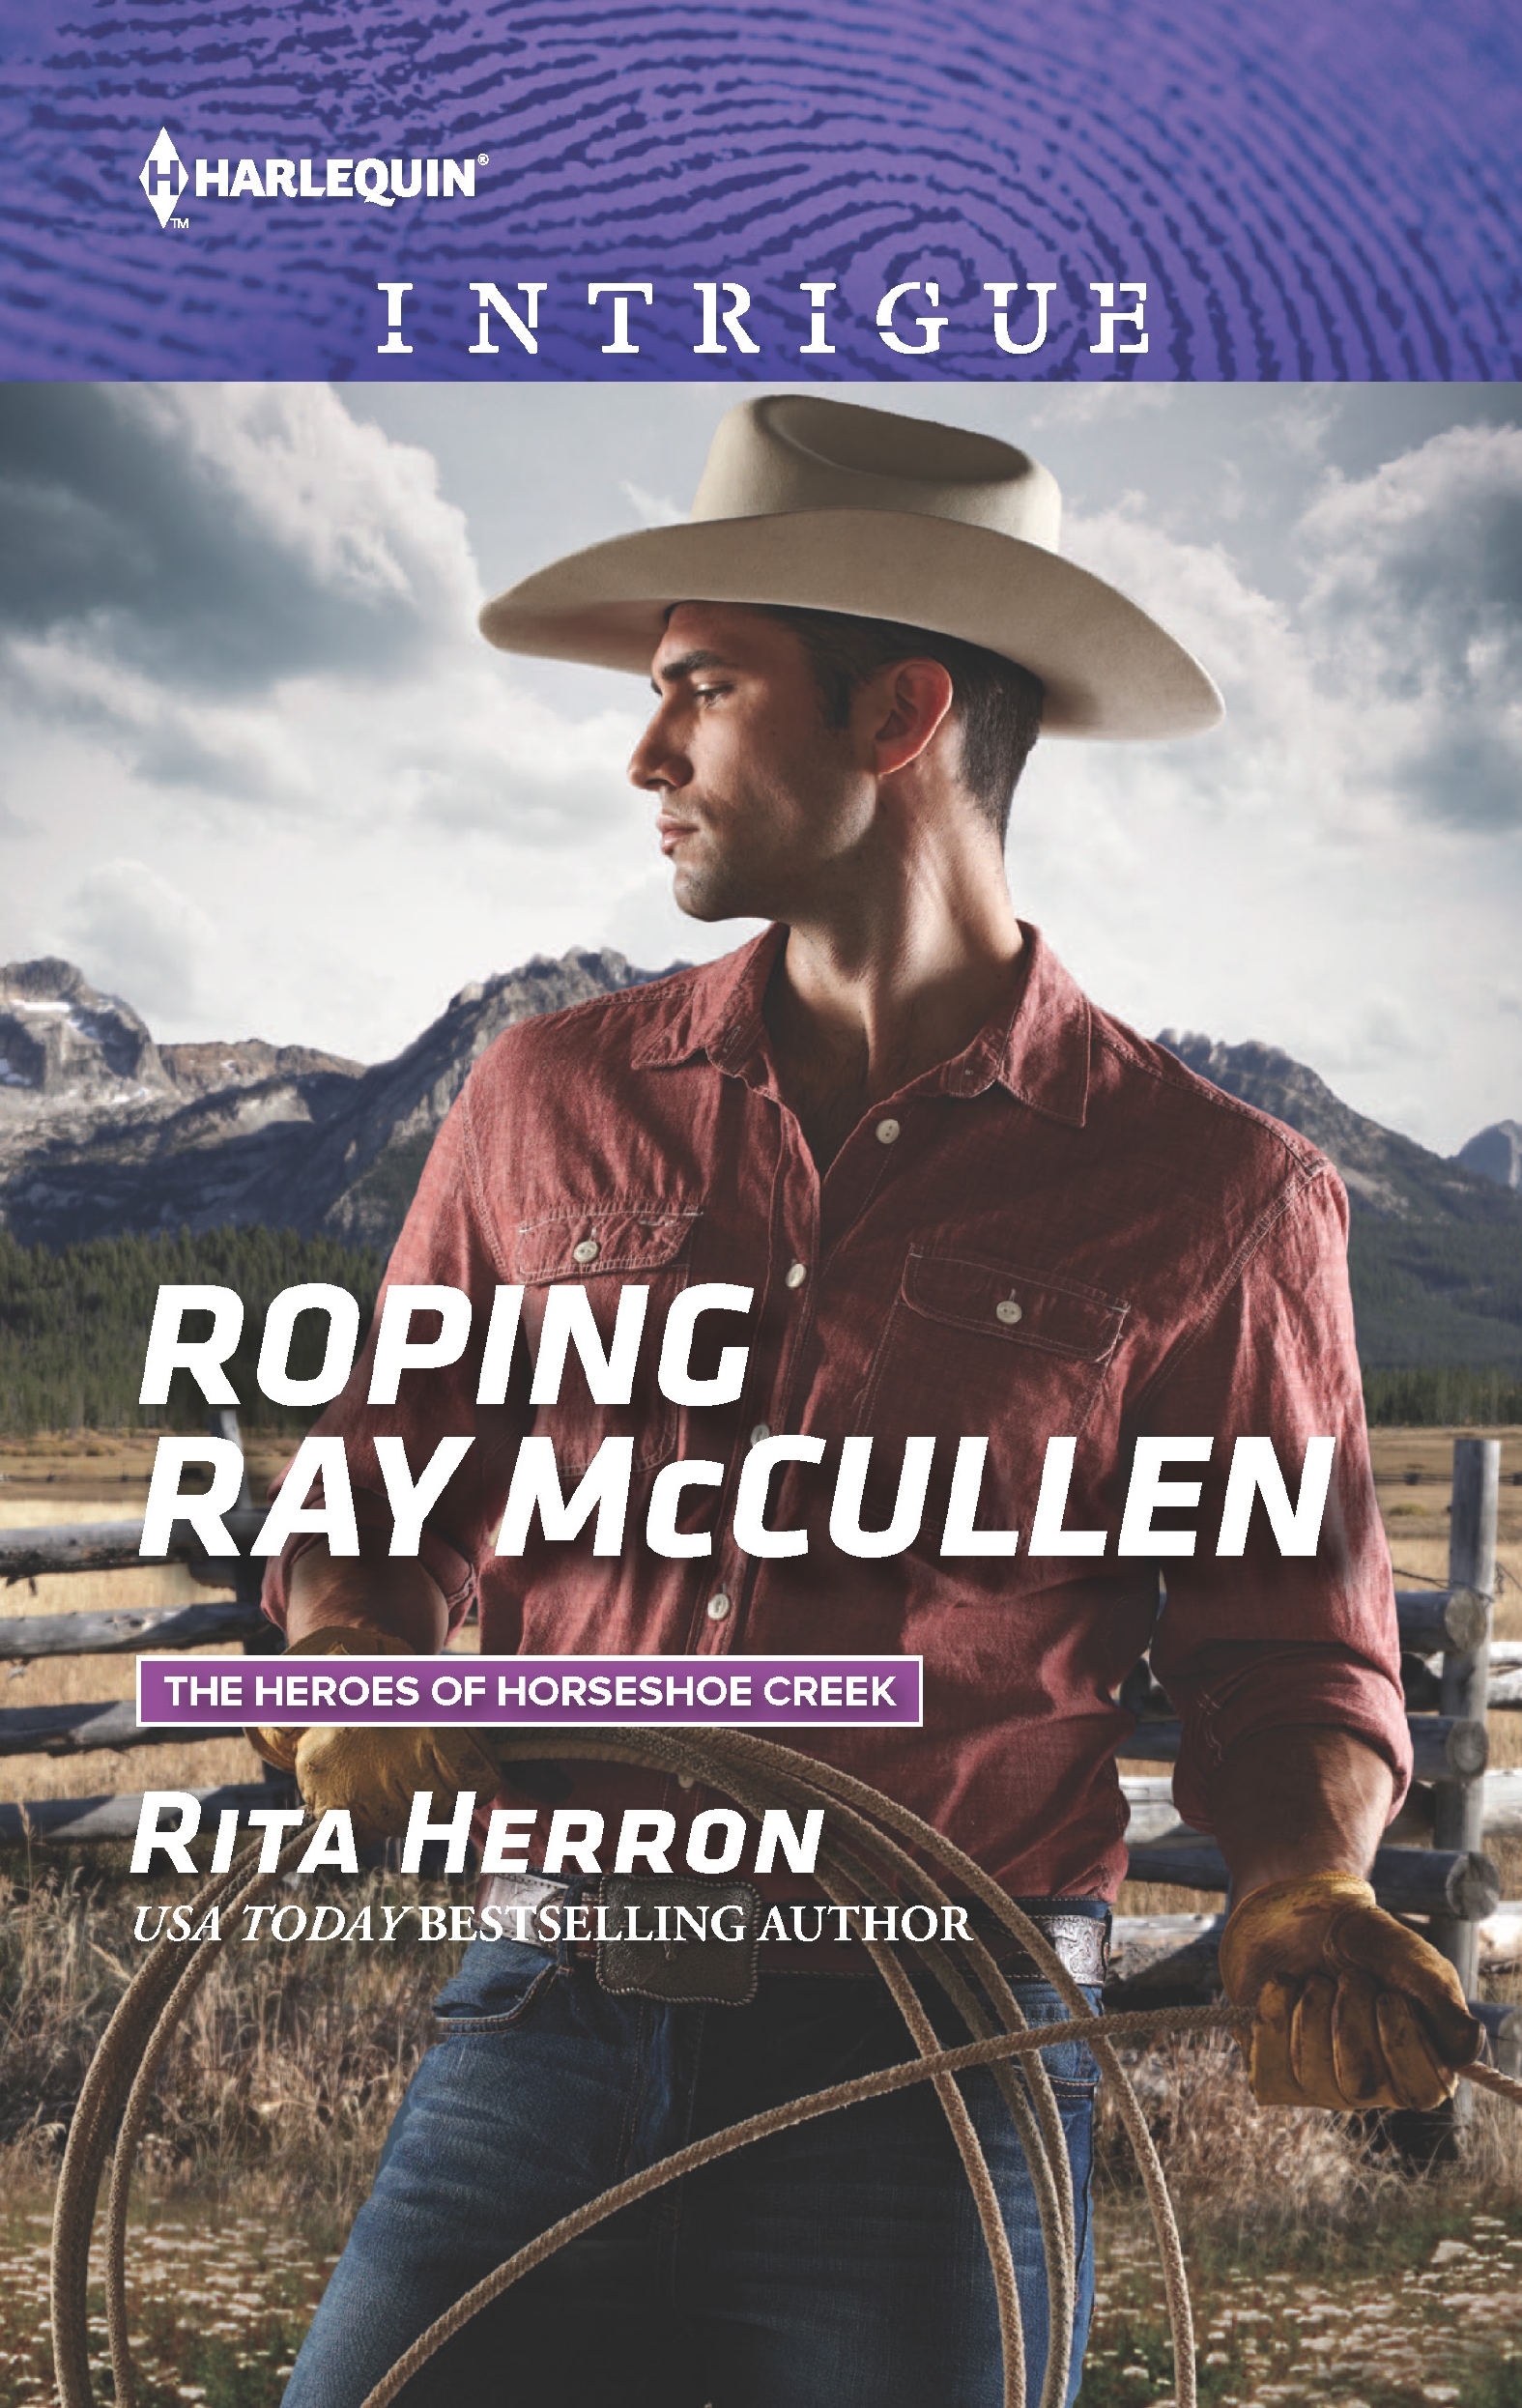 Roping Ray McCullen (2016) by Rita Herron